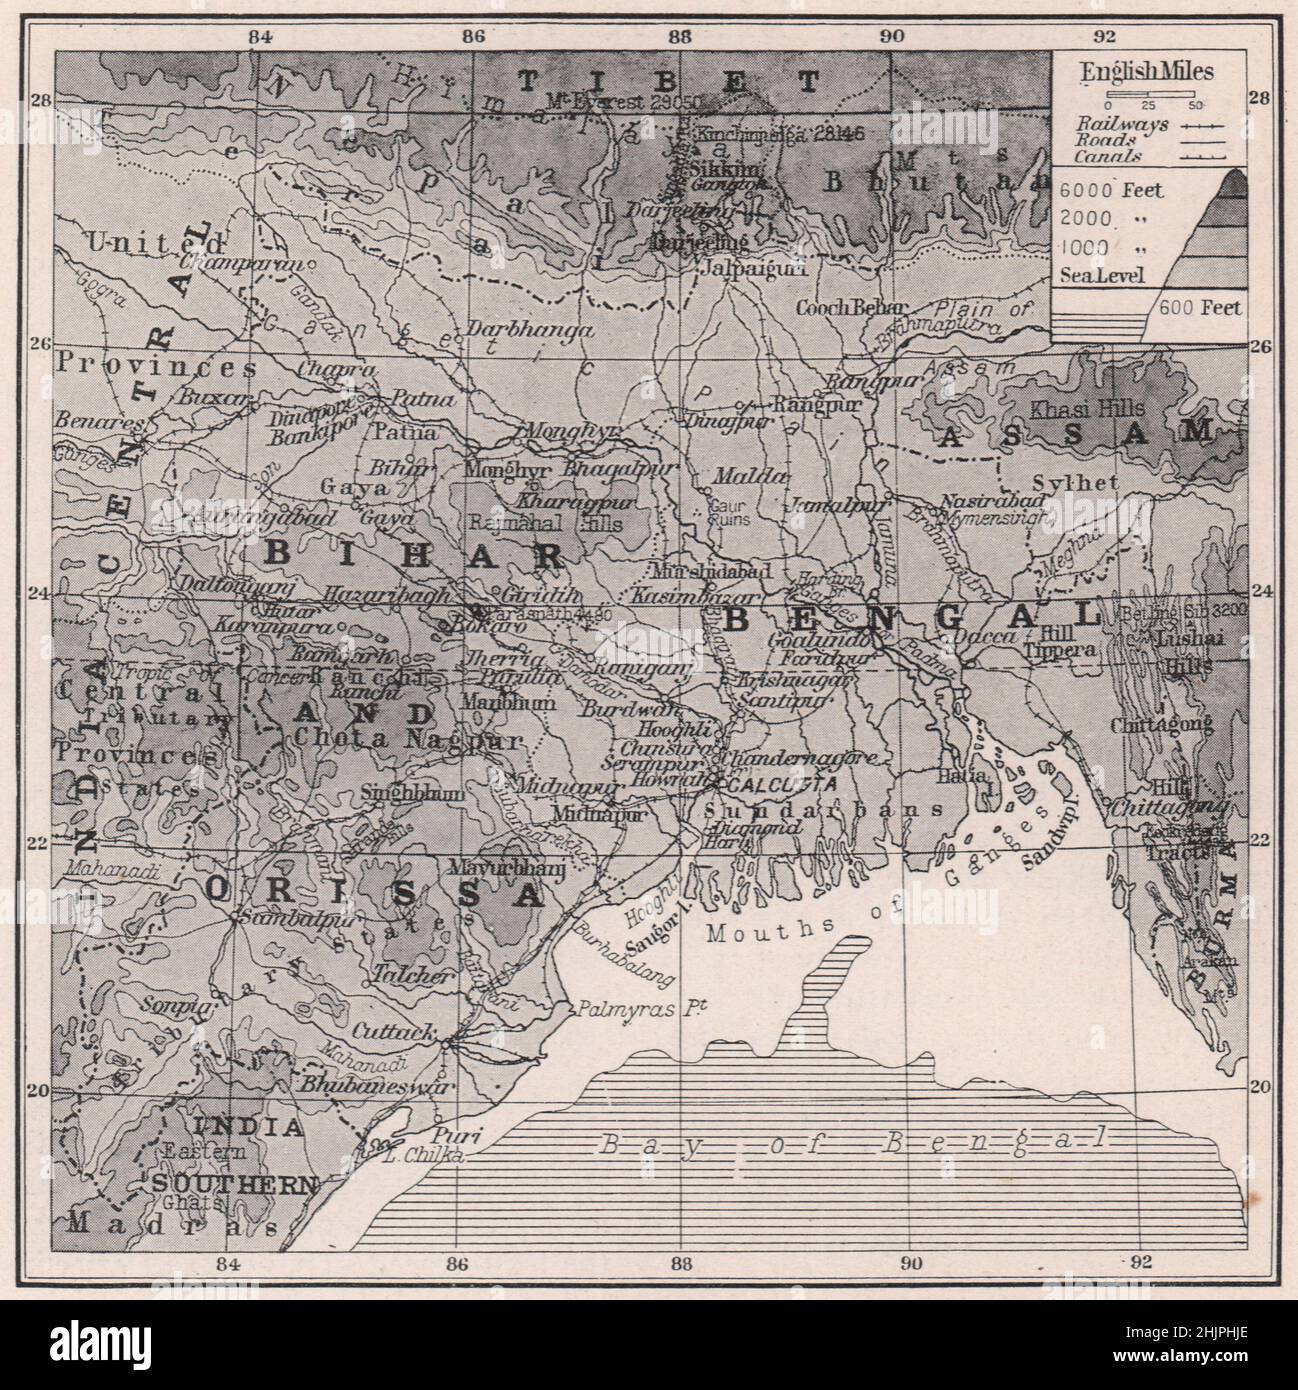 Vast Alluvial plains of Bengal Bihar and Orissa. India (1923 map) Stock Photo